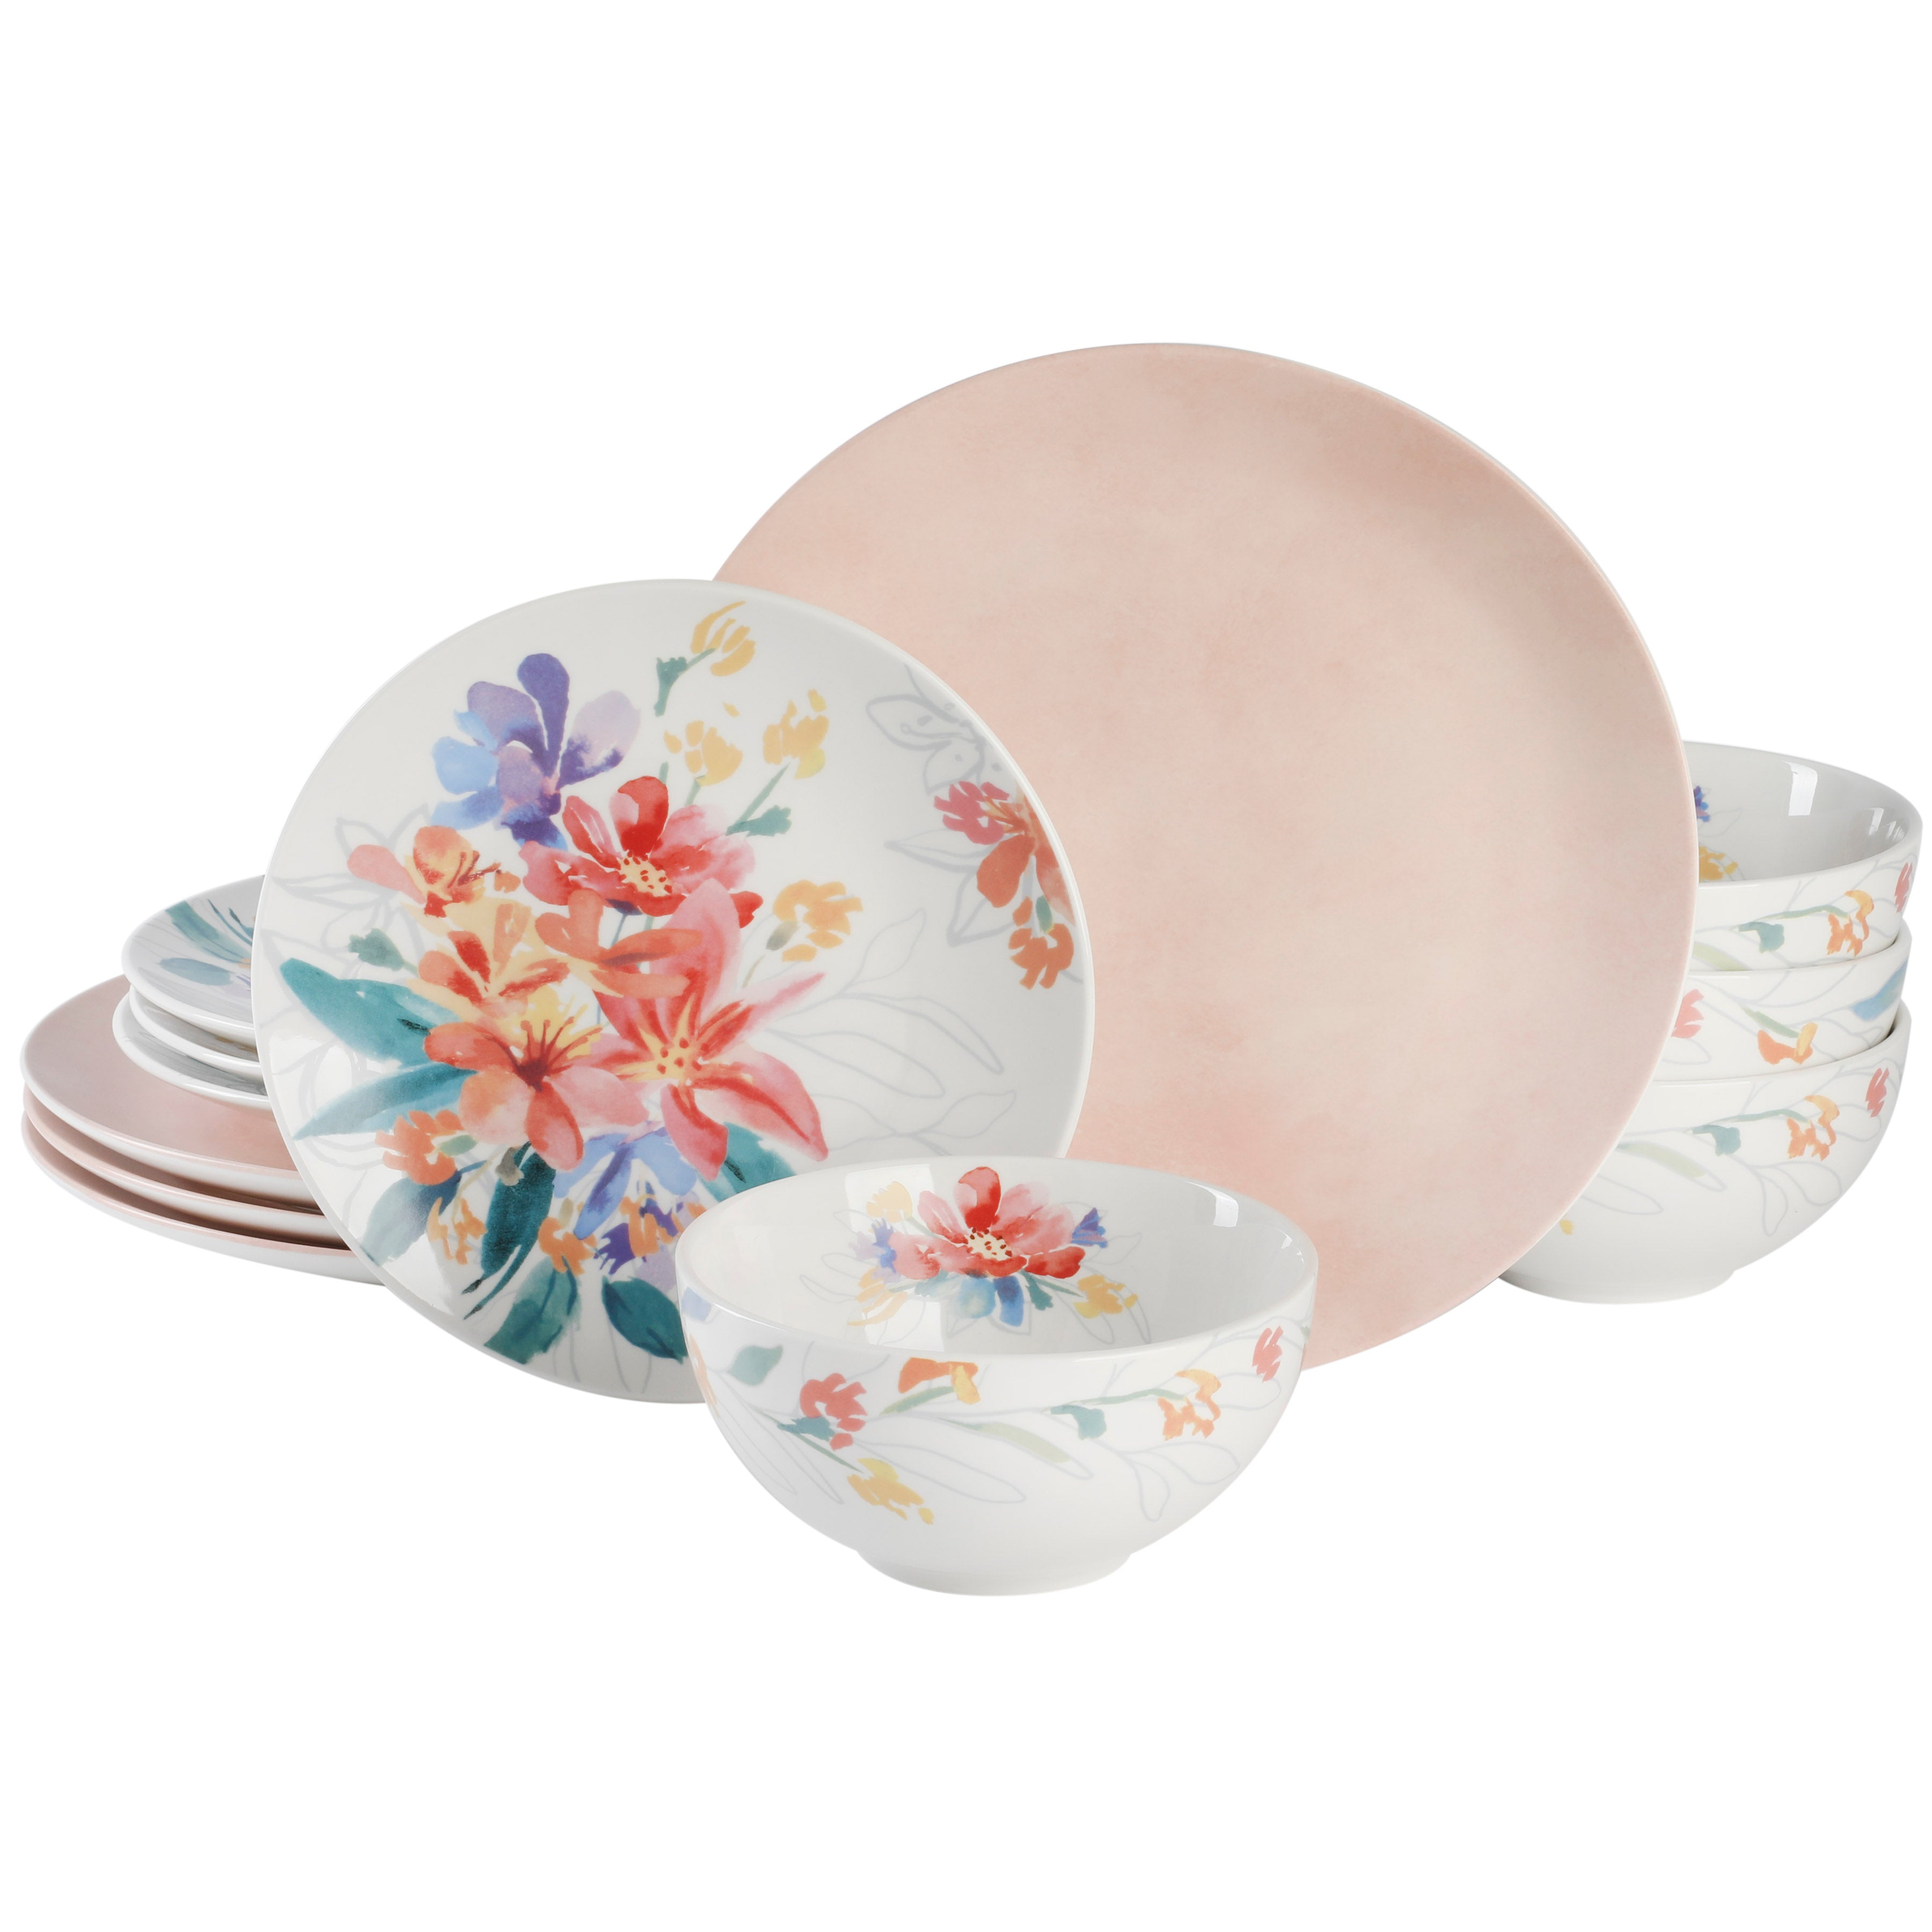 Spice by Tia Mowry Goji Blossom 12-Piece Decorated Porcelain Dinnerware Set